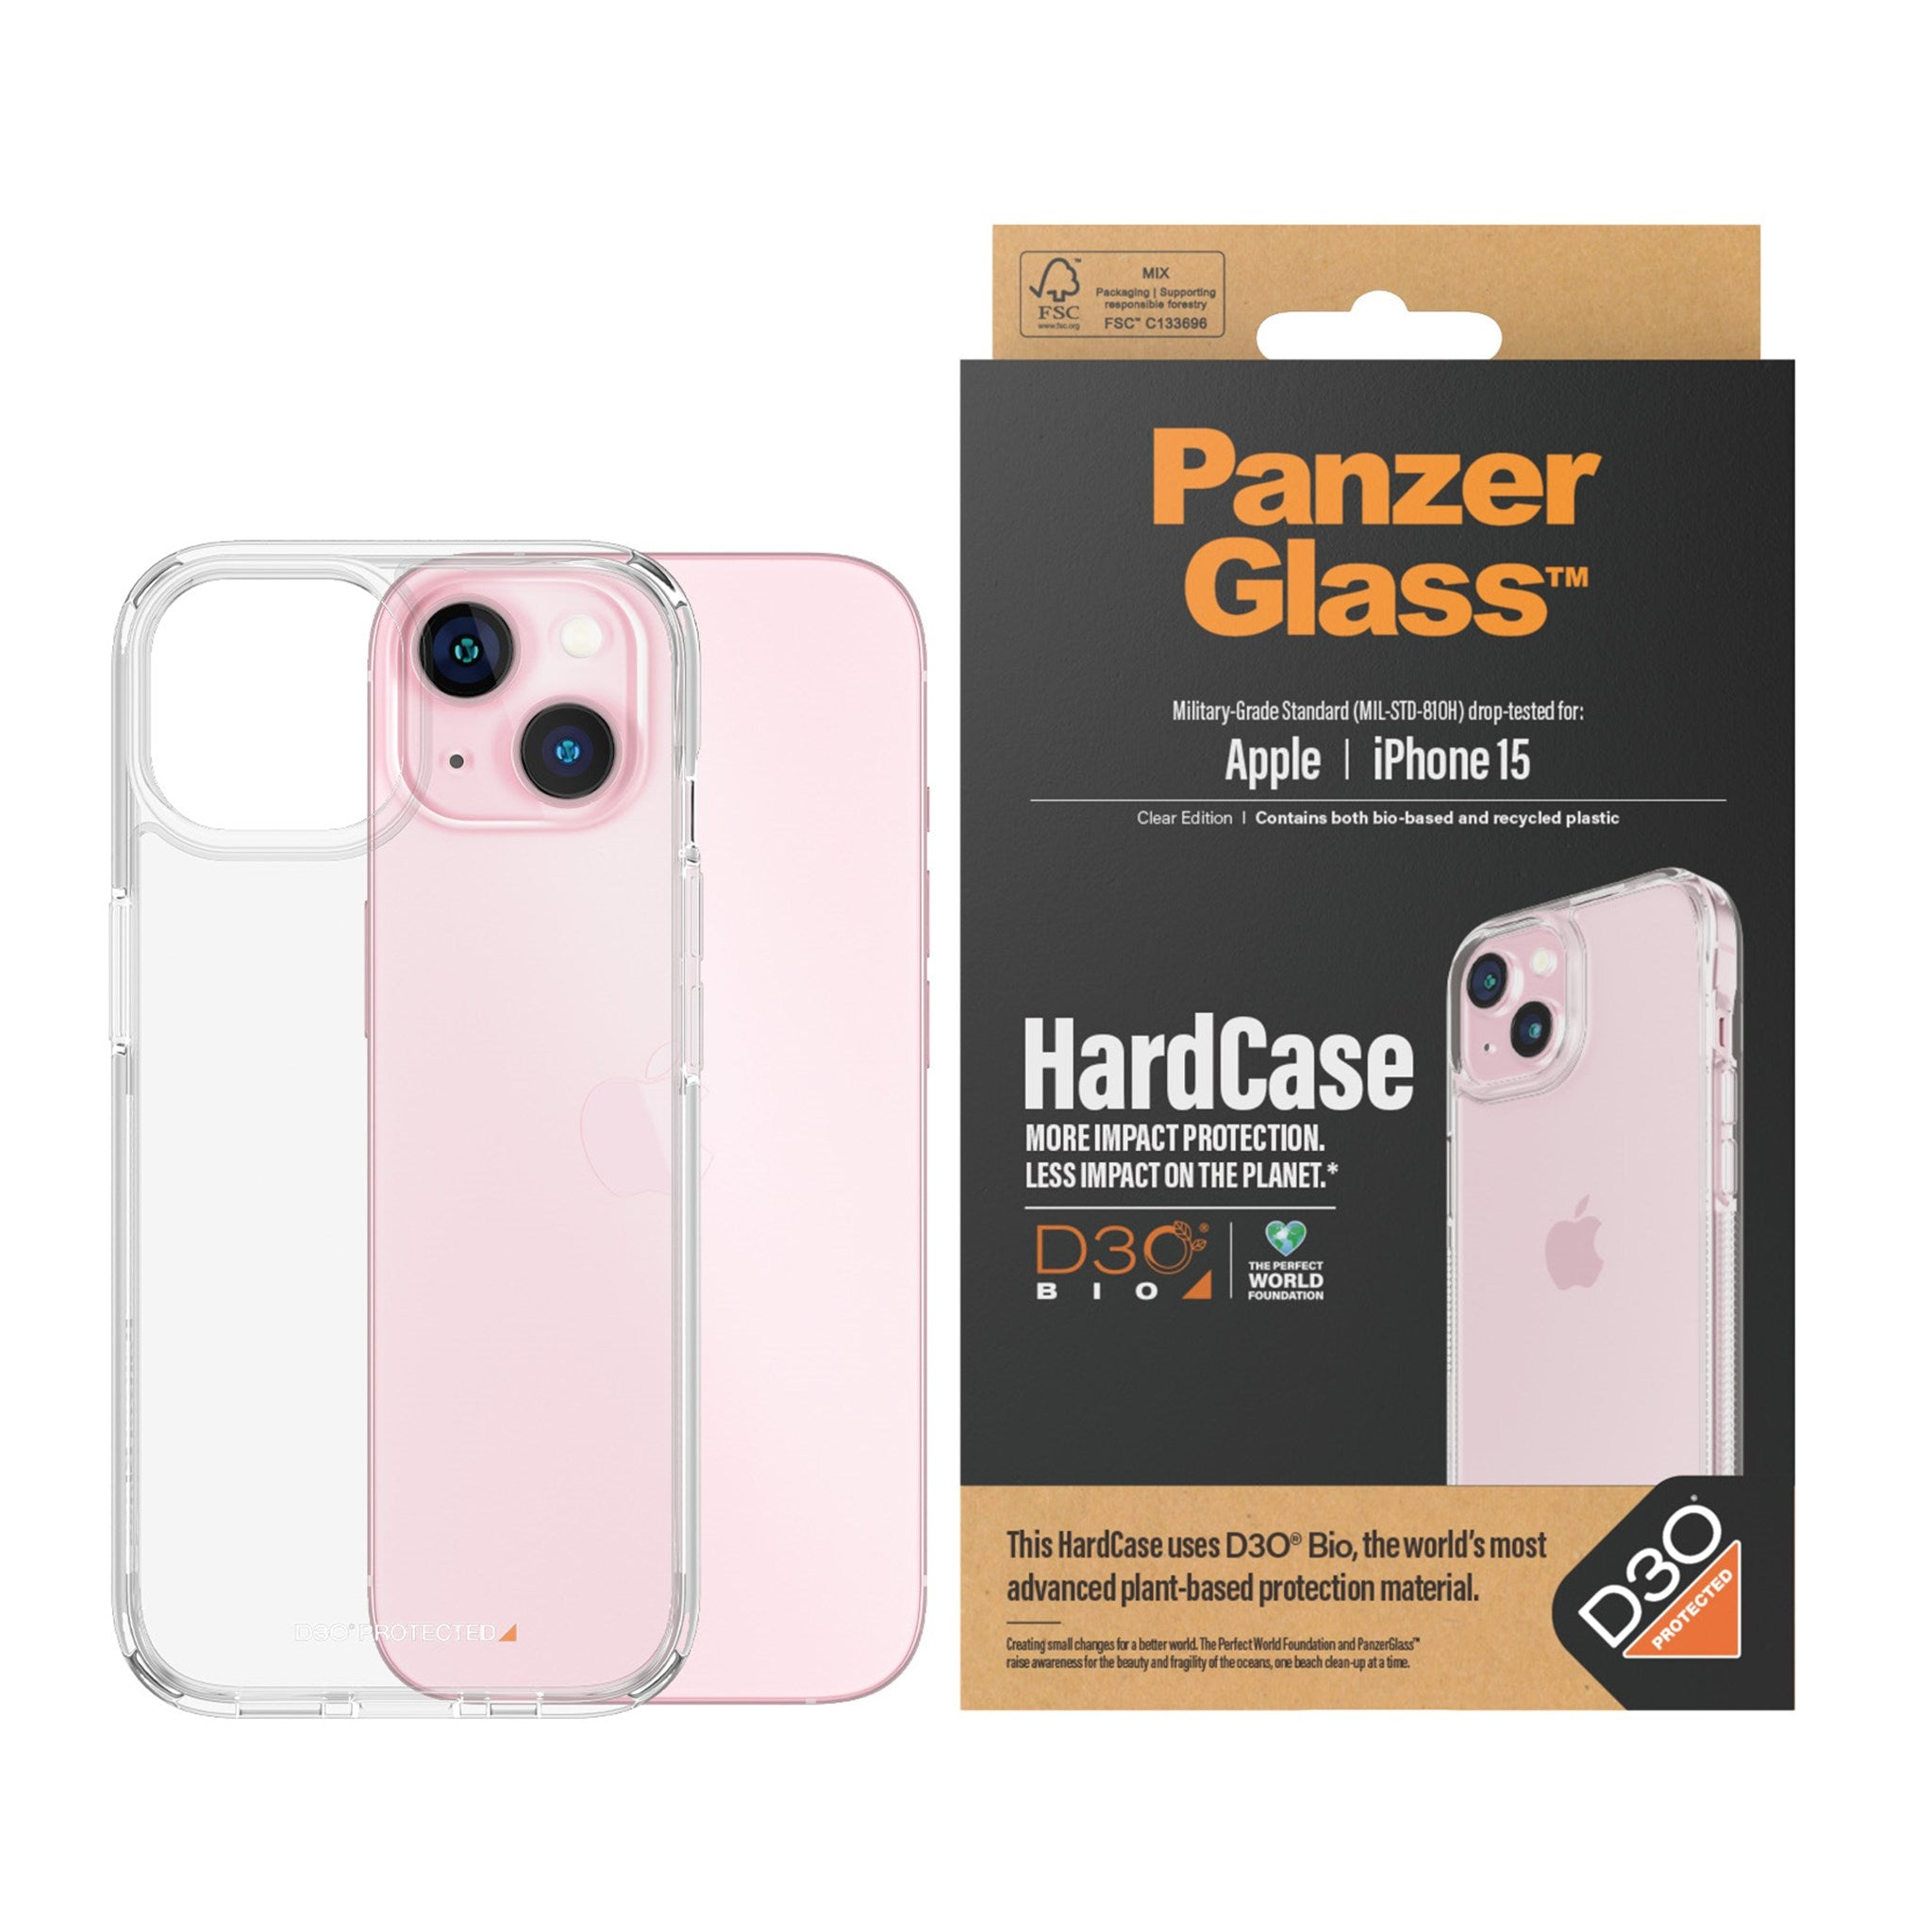 PANZERGLASS HardCase mit D3O Phone 15) iPhone Apple Case(für